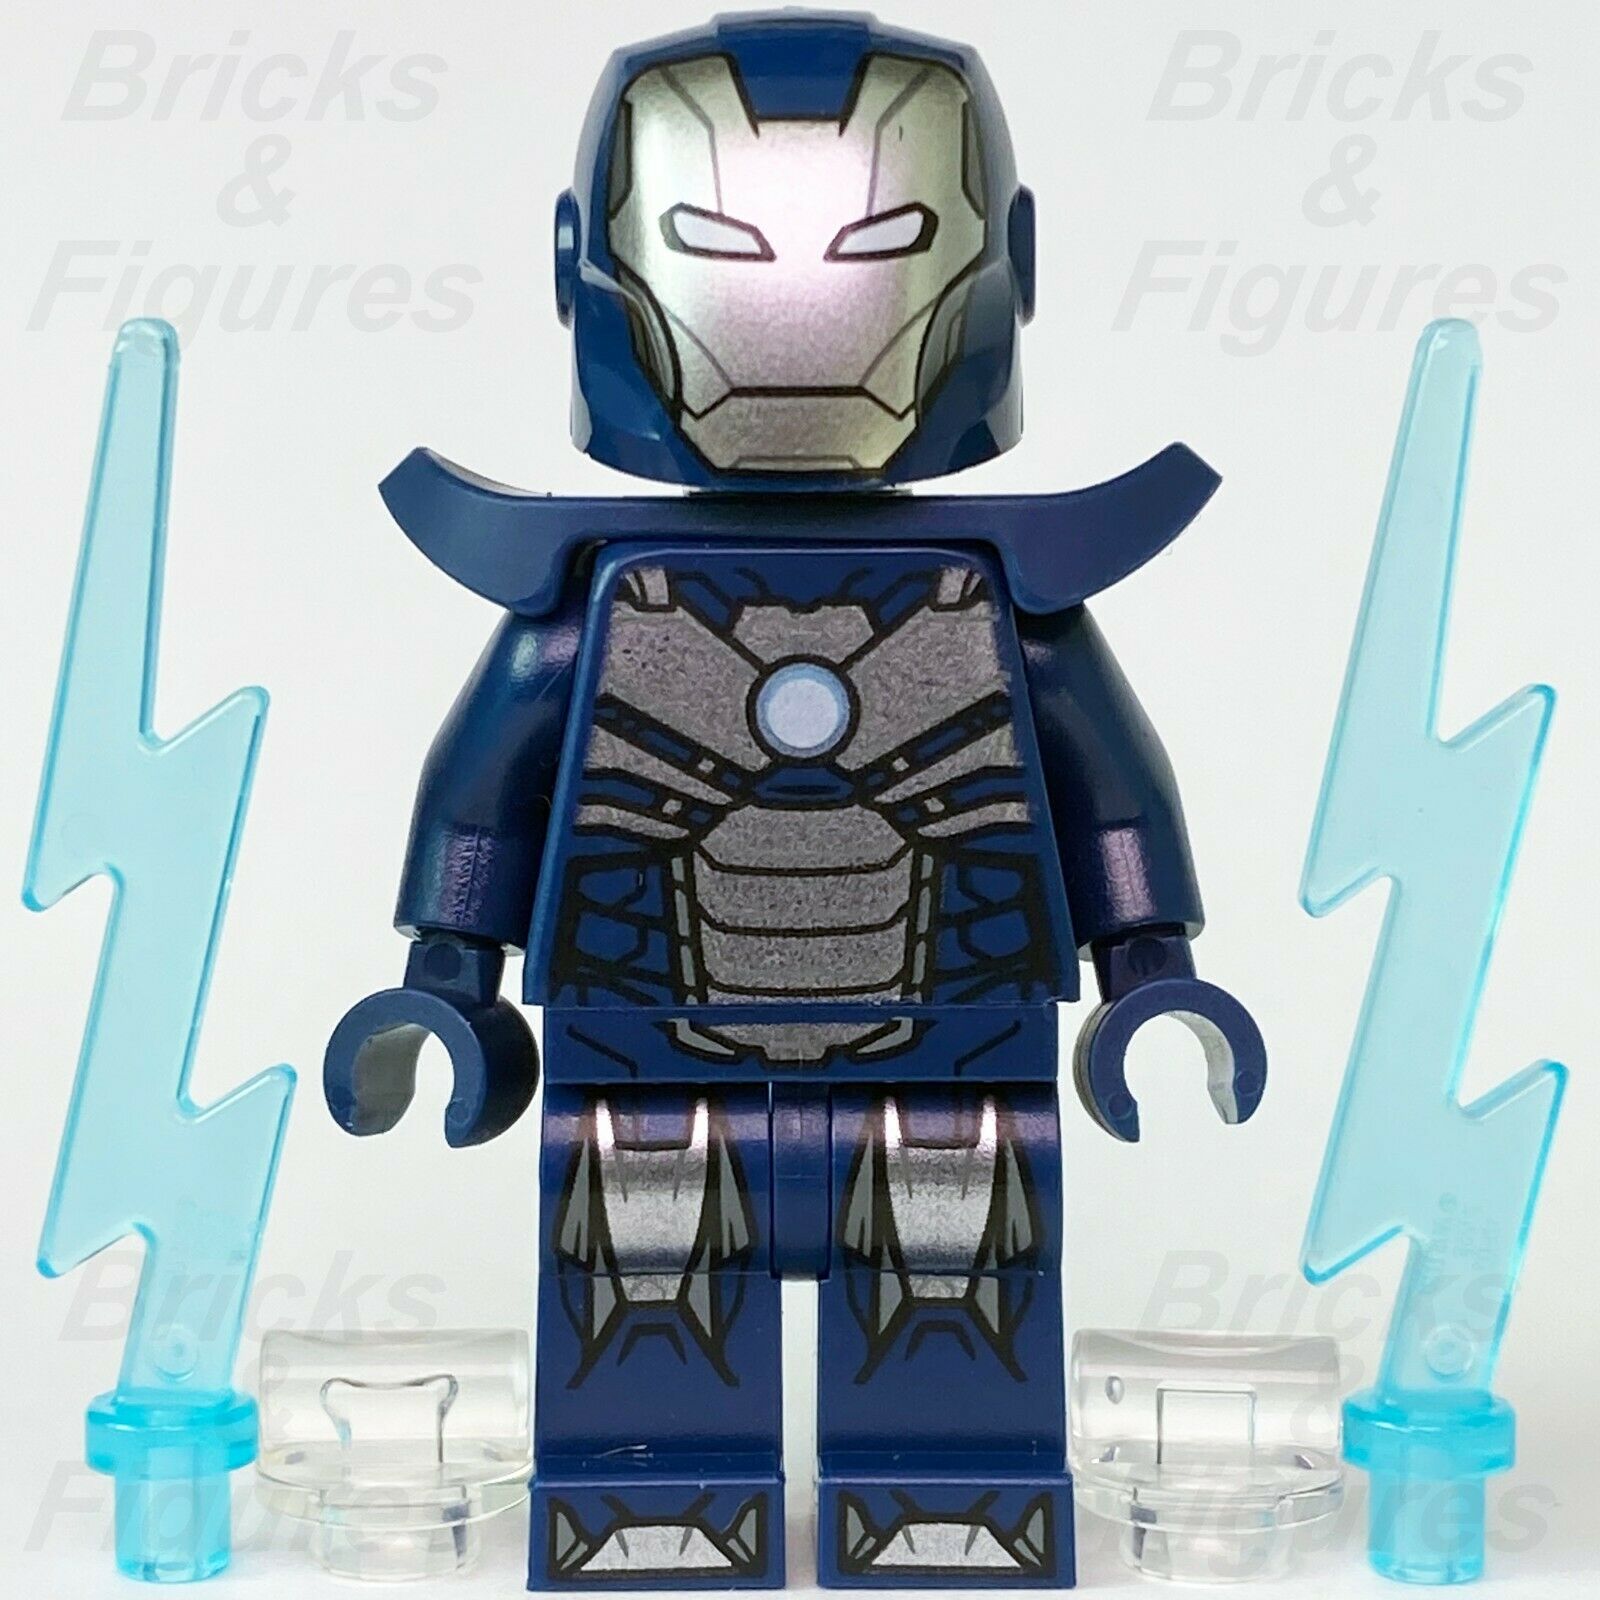 LEGO Marvel Avengers Iron Man Armory 76167 - Bygg din superhjälte Iron  Man-kollektion